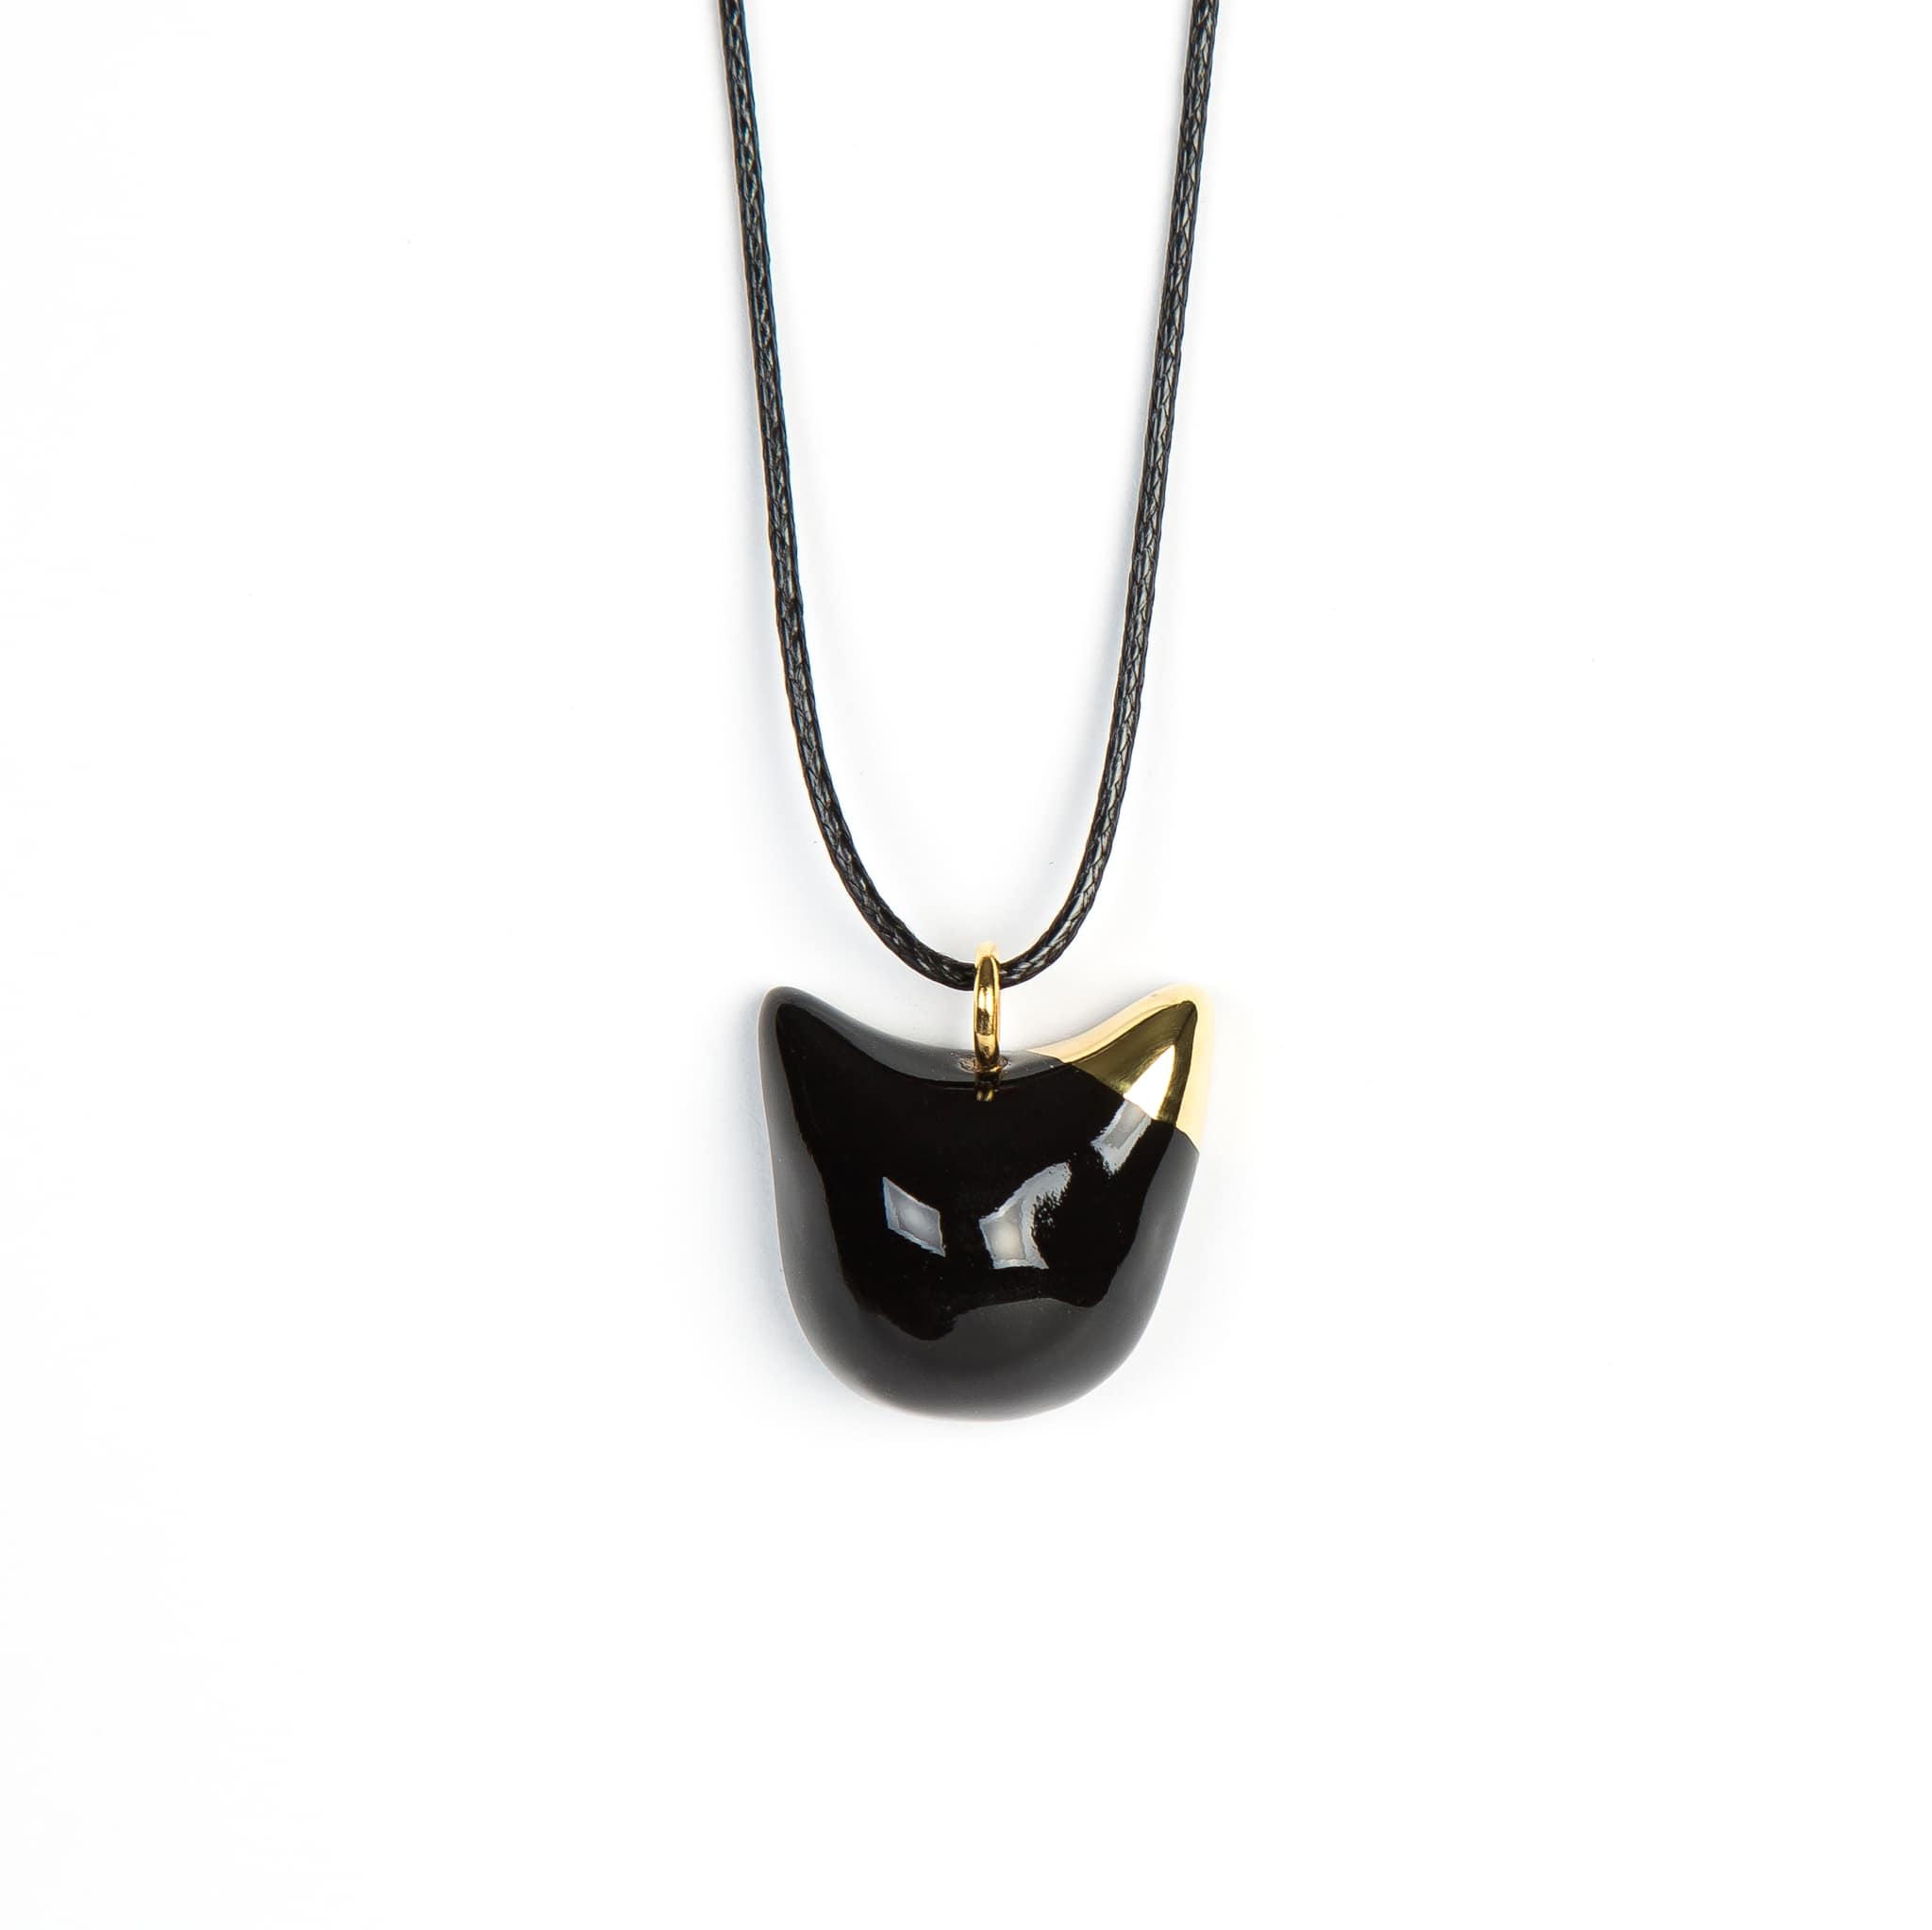 The_black_cat_necklace-min.jpg